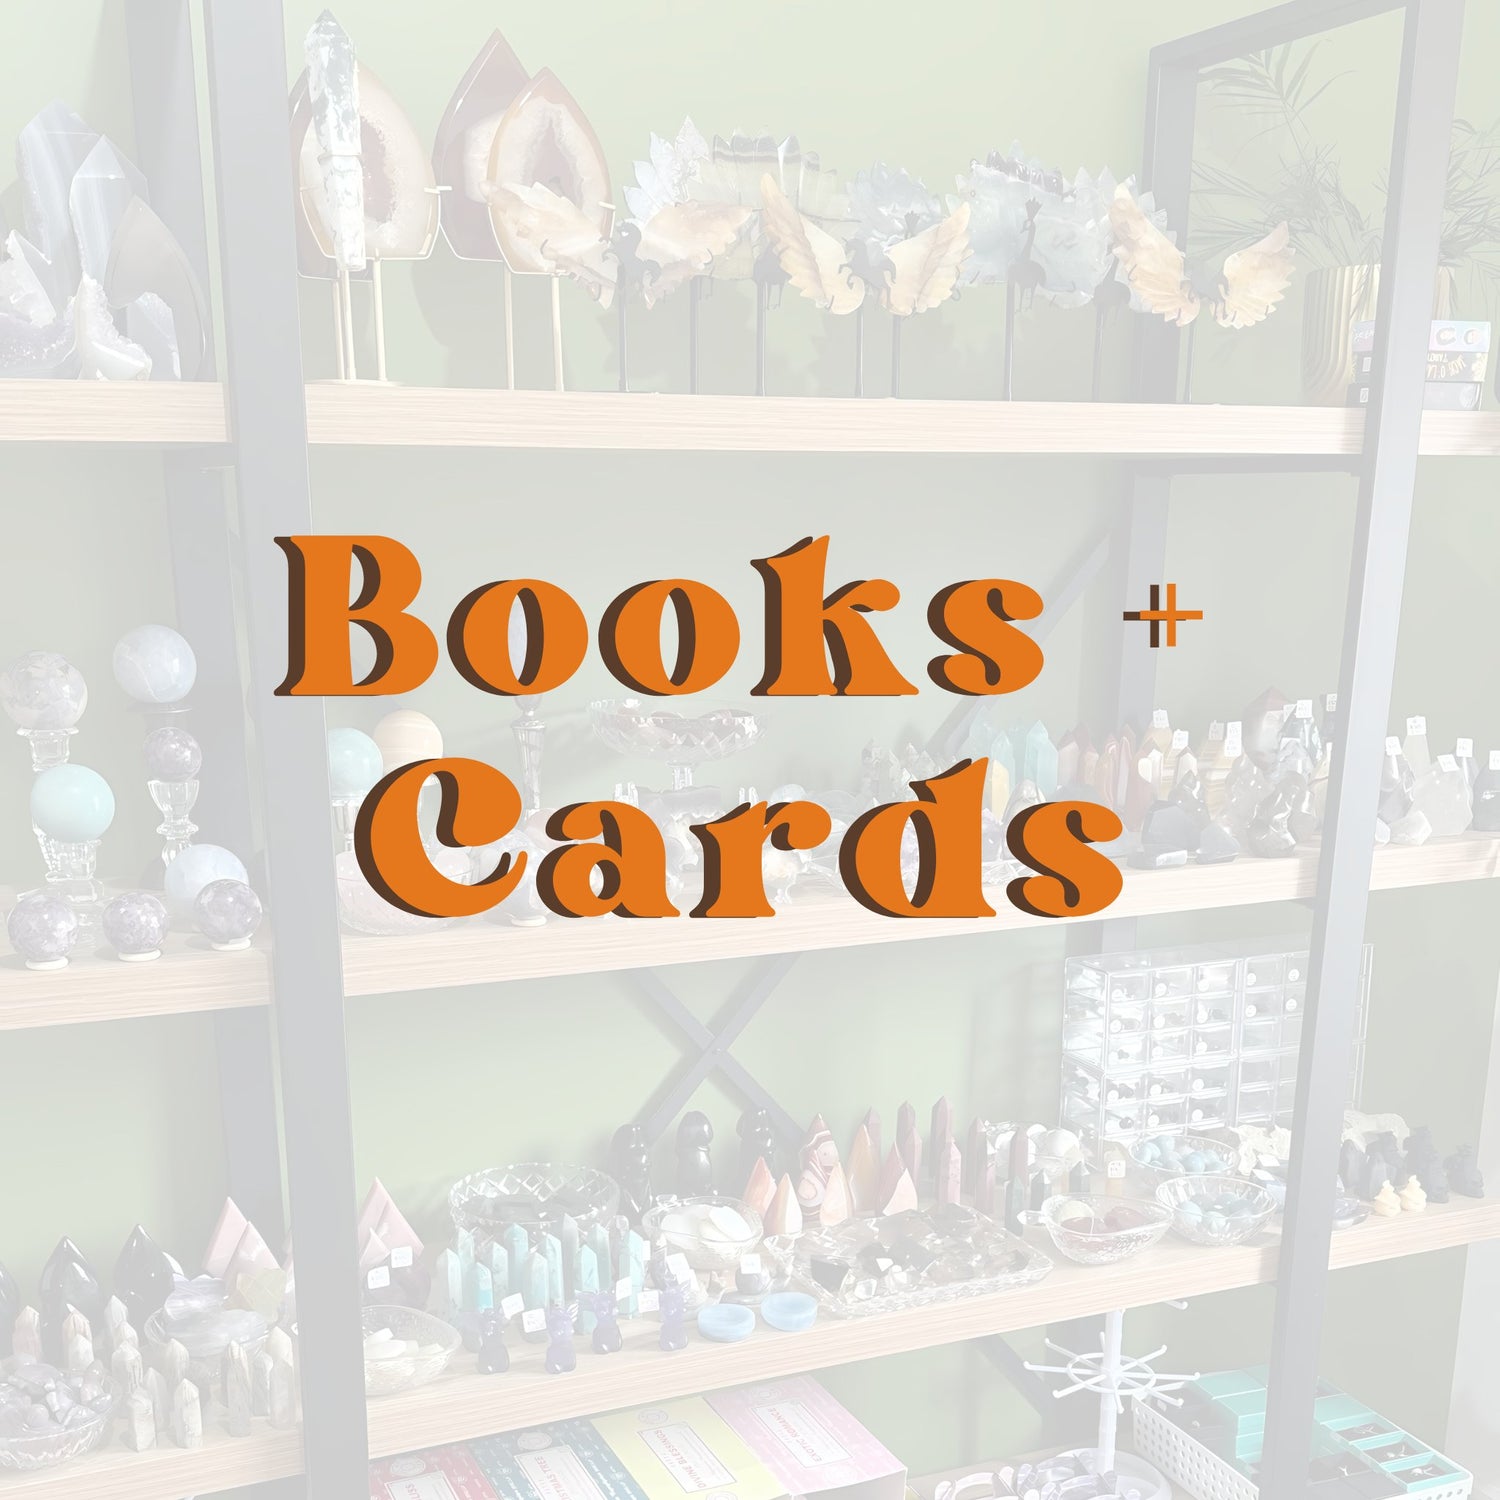 Books + Cards